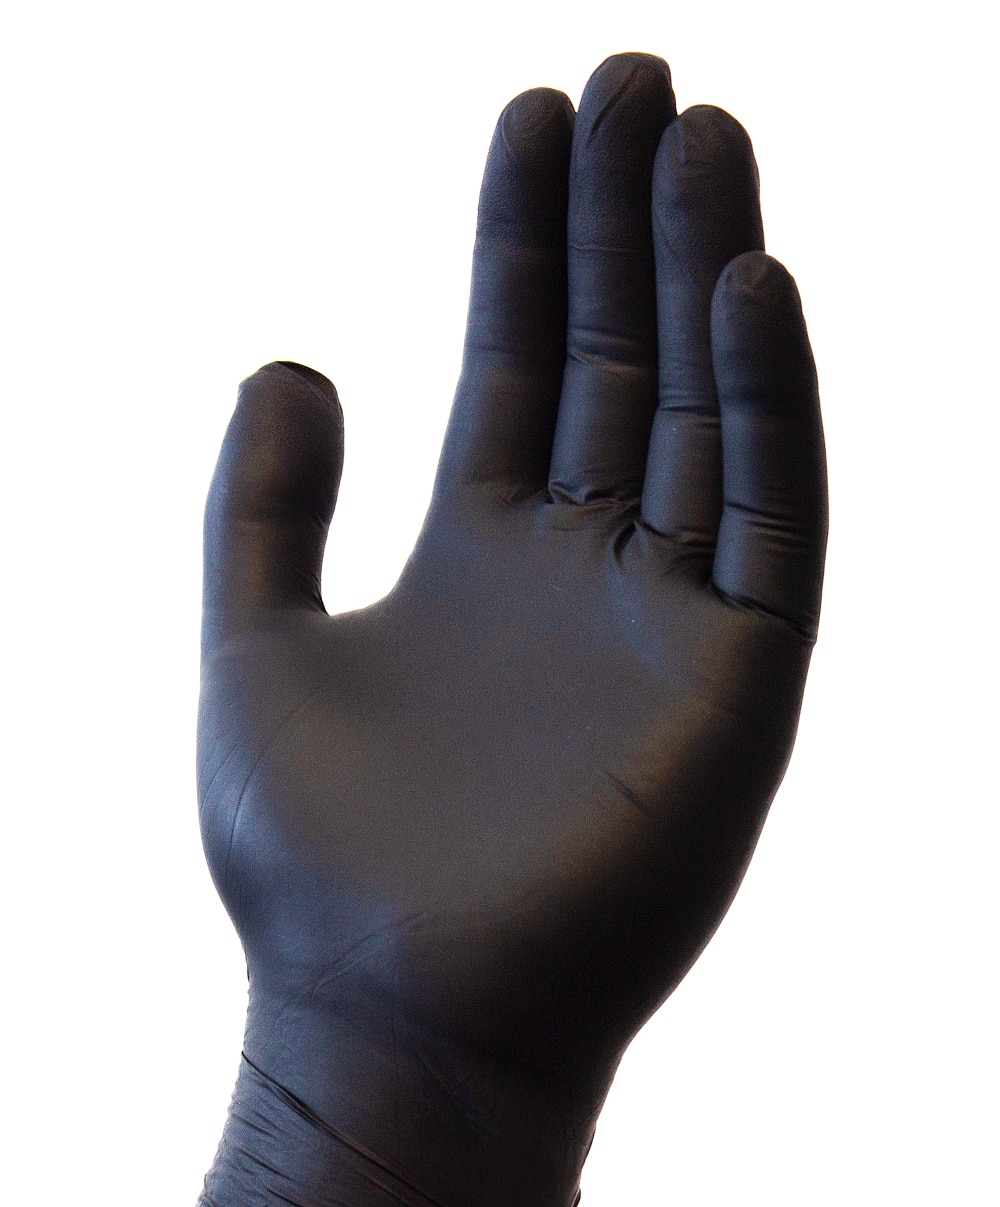 GNEP-SM-K N4431 4.3Mil Nitrile 
Medical Grade Powder Free 
Black Glove 100/Bx 10Bx/Cs